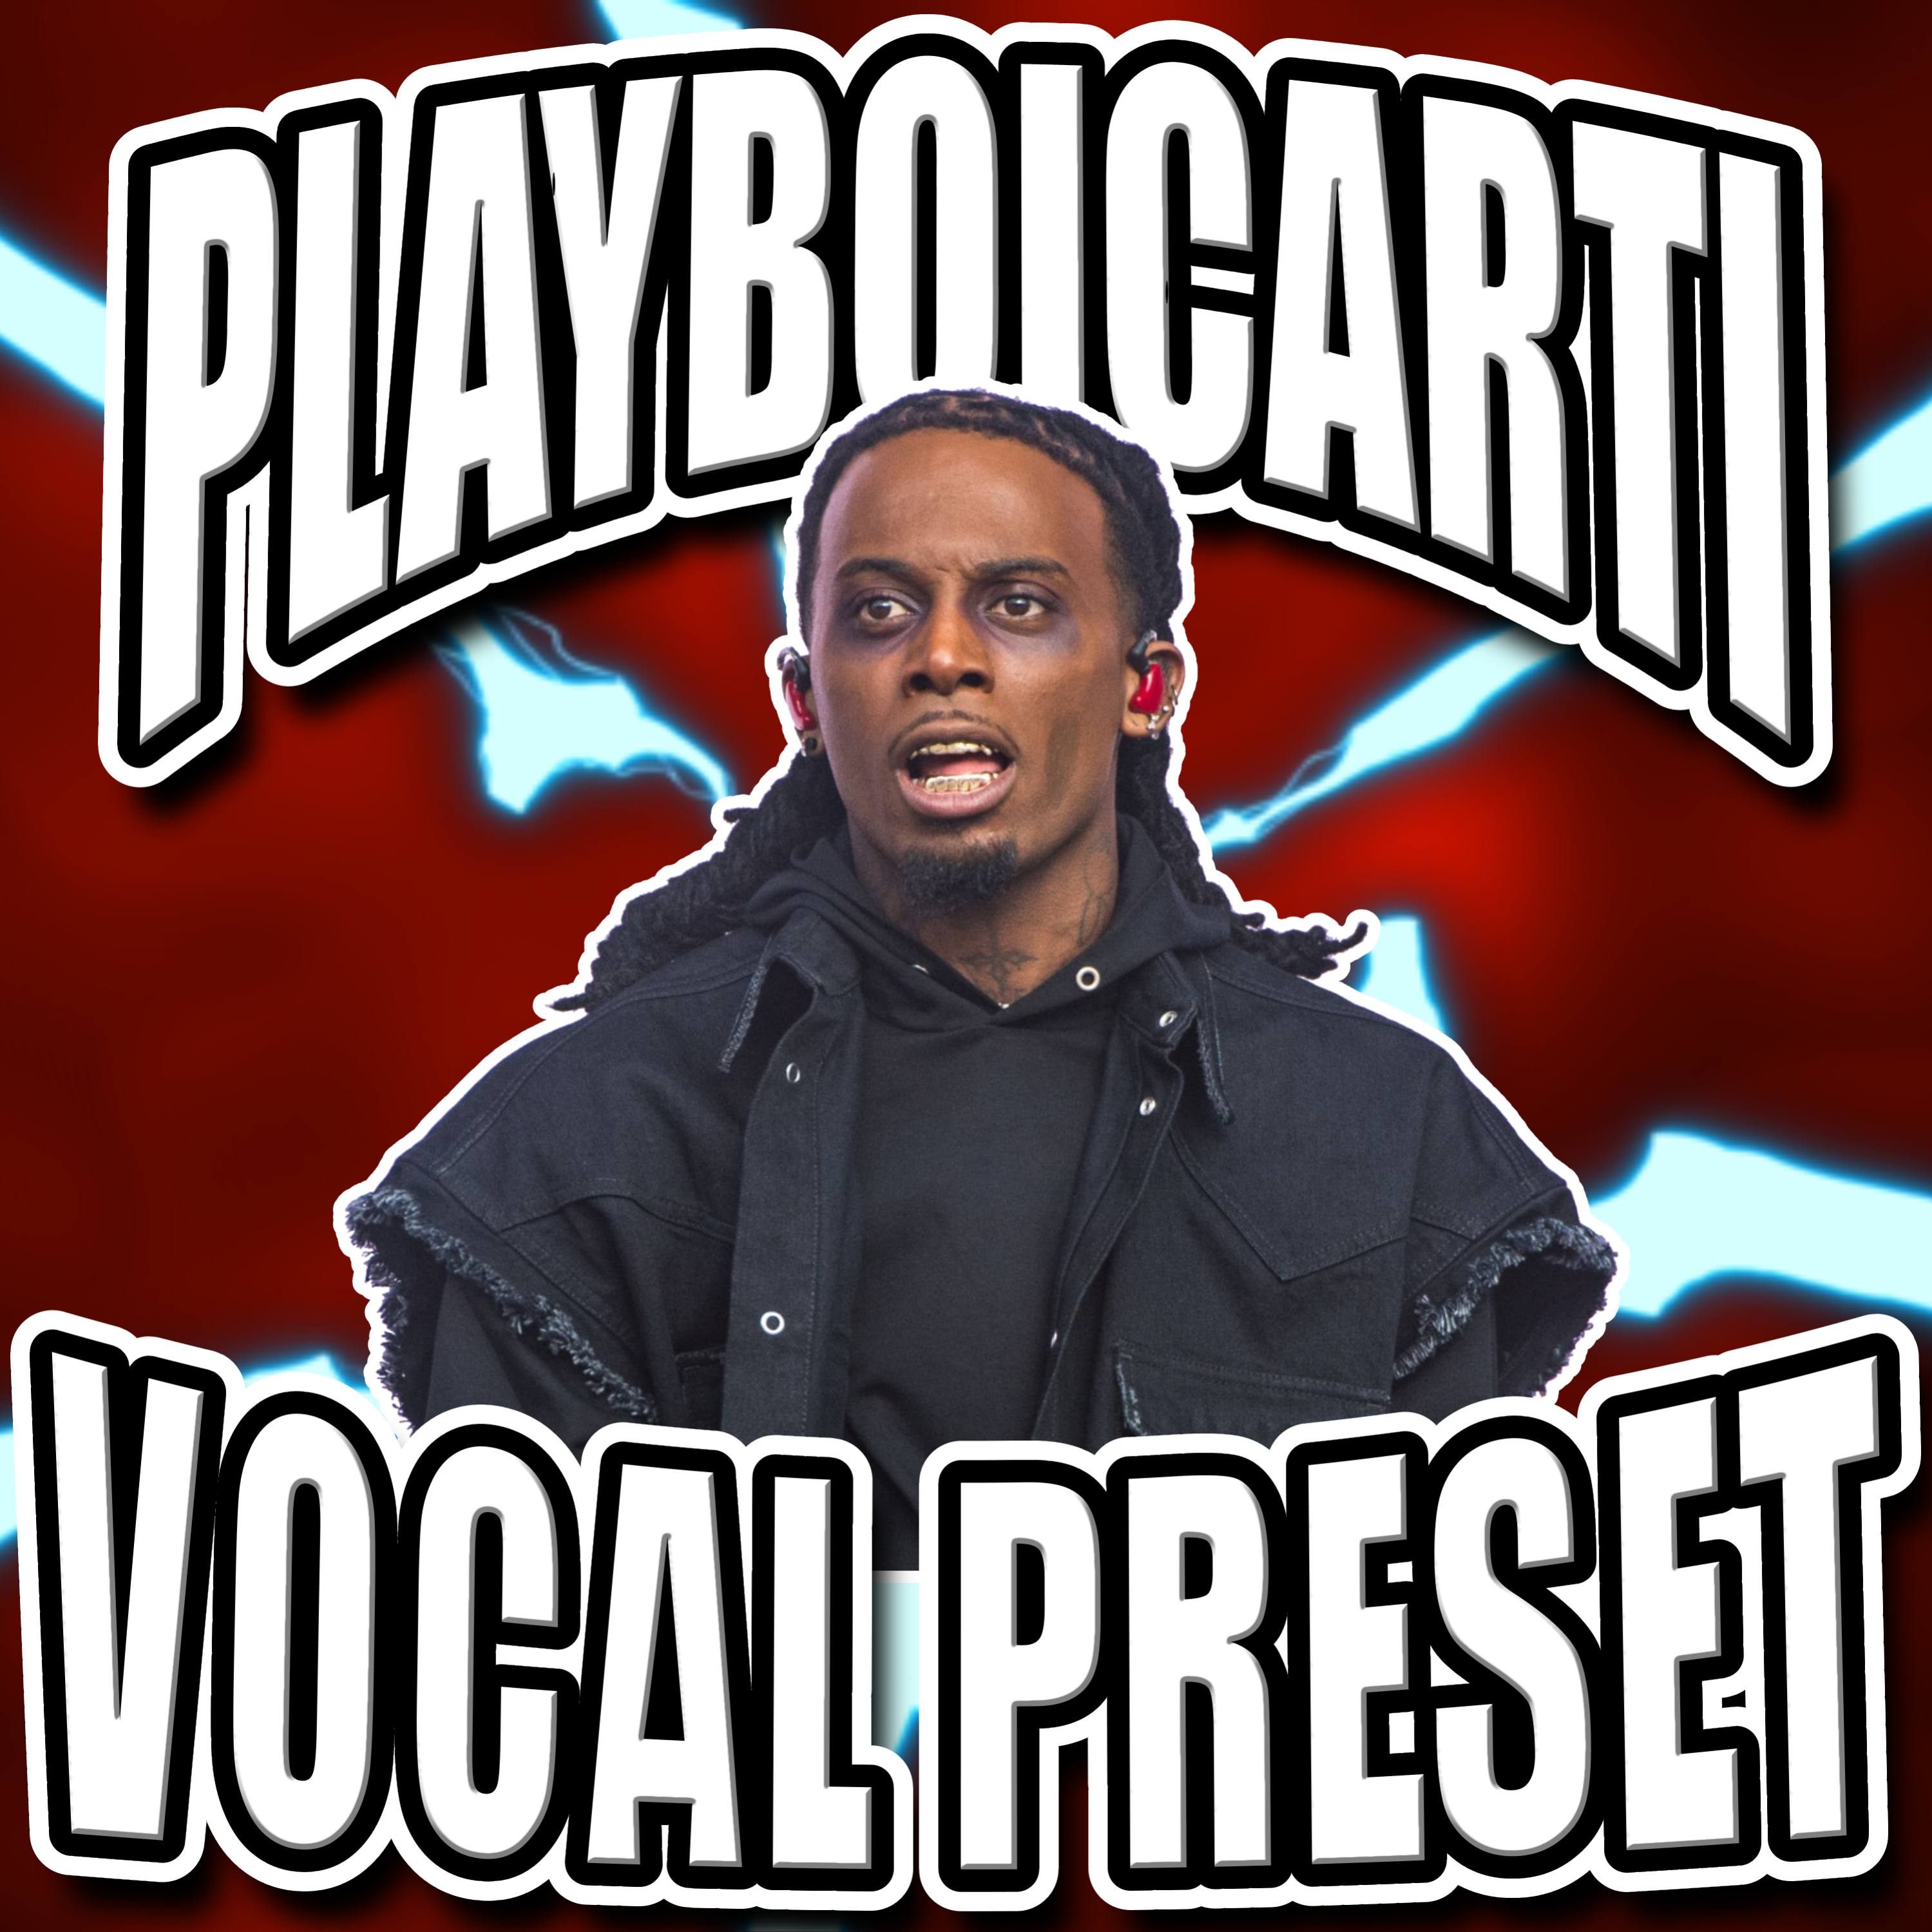 Playboicarti Vocal Preset